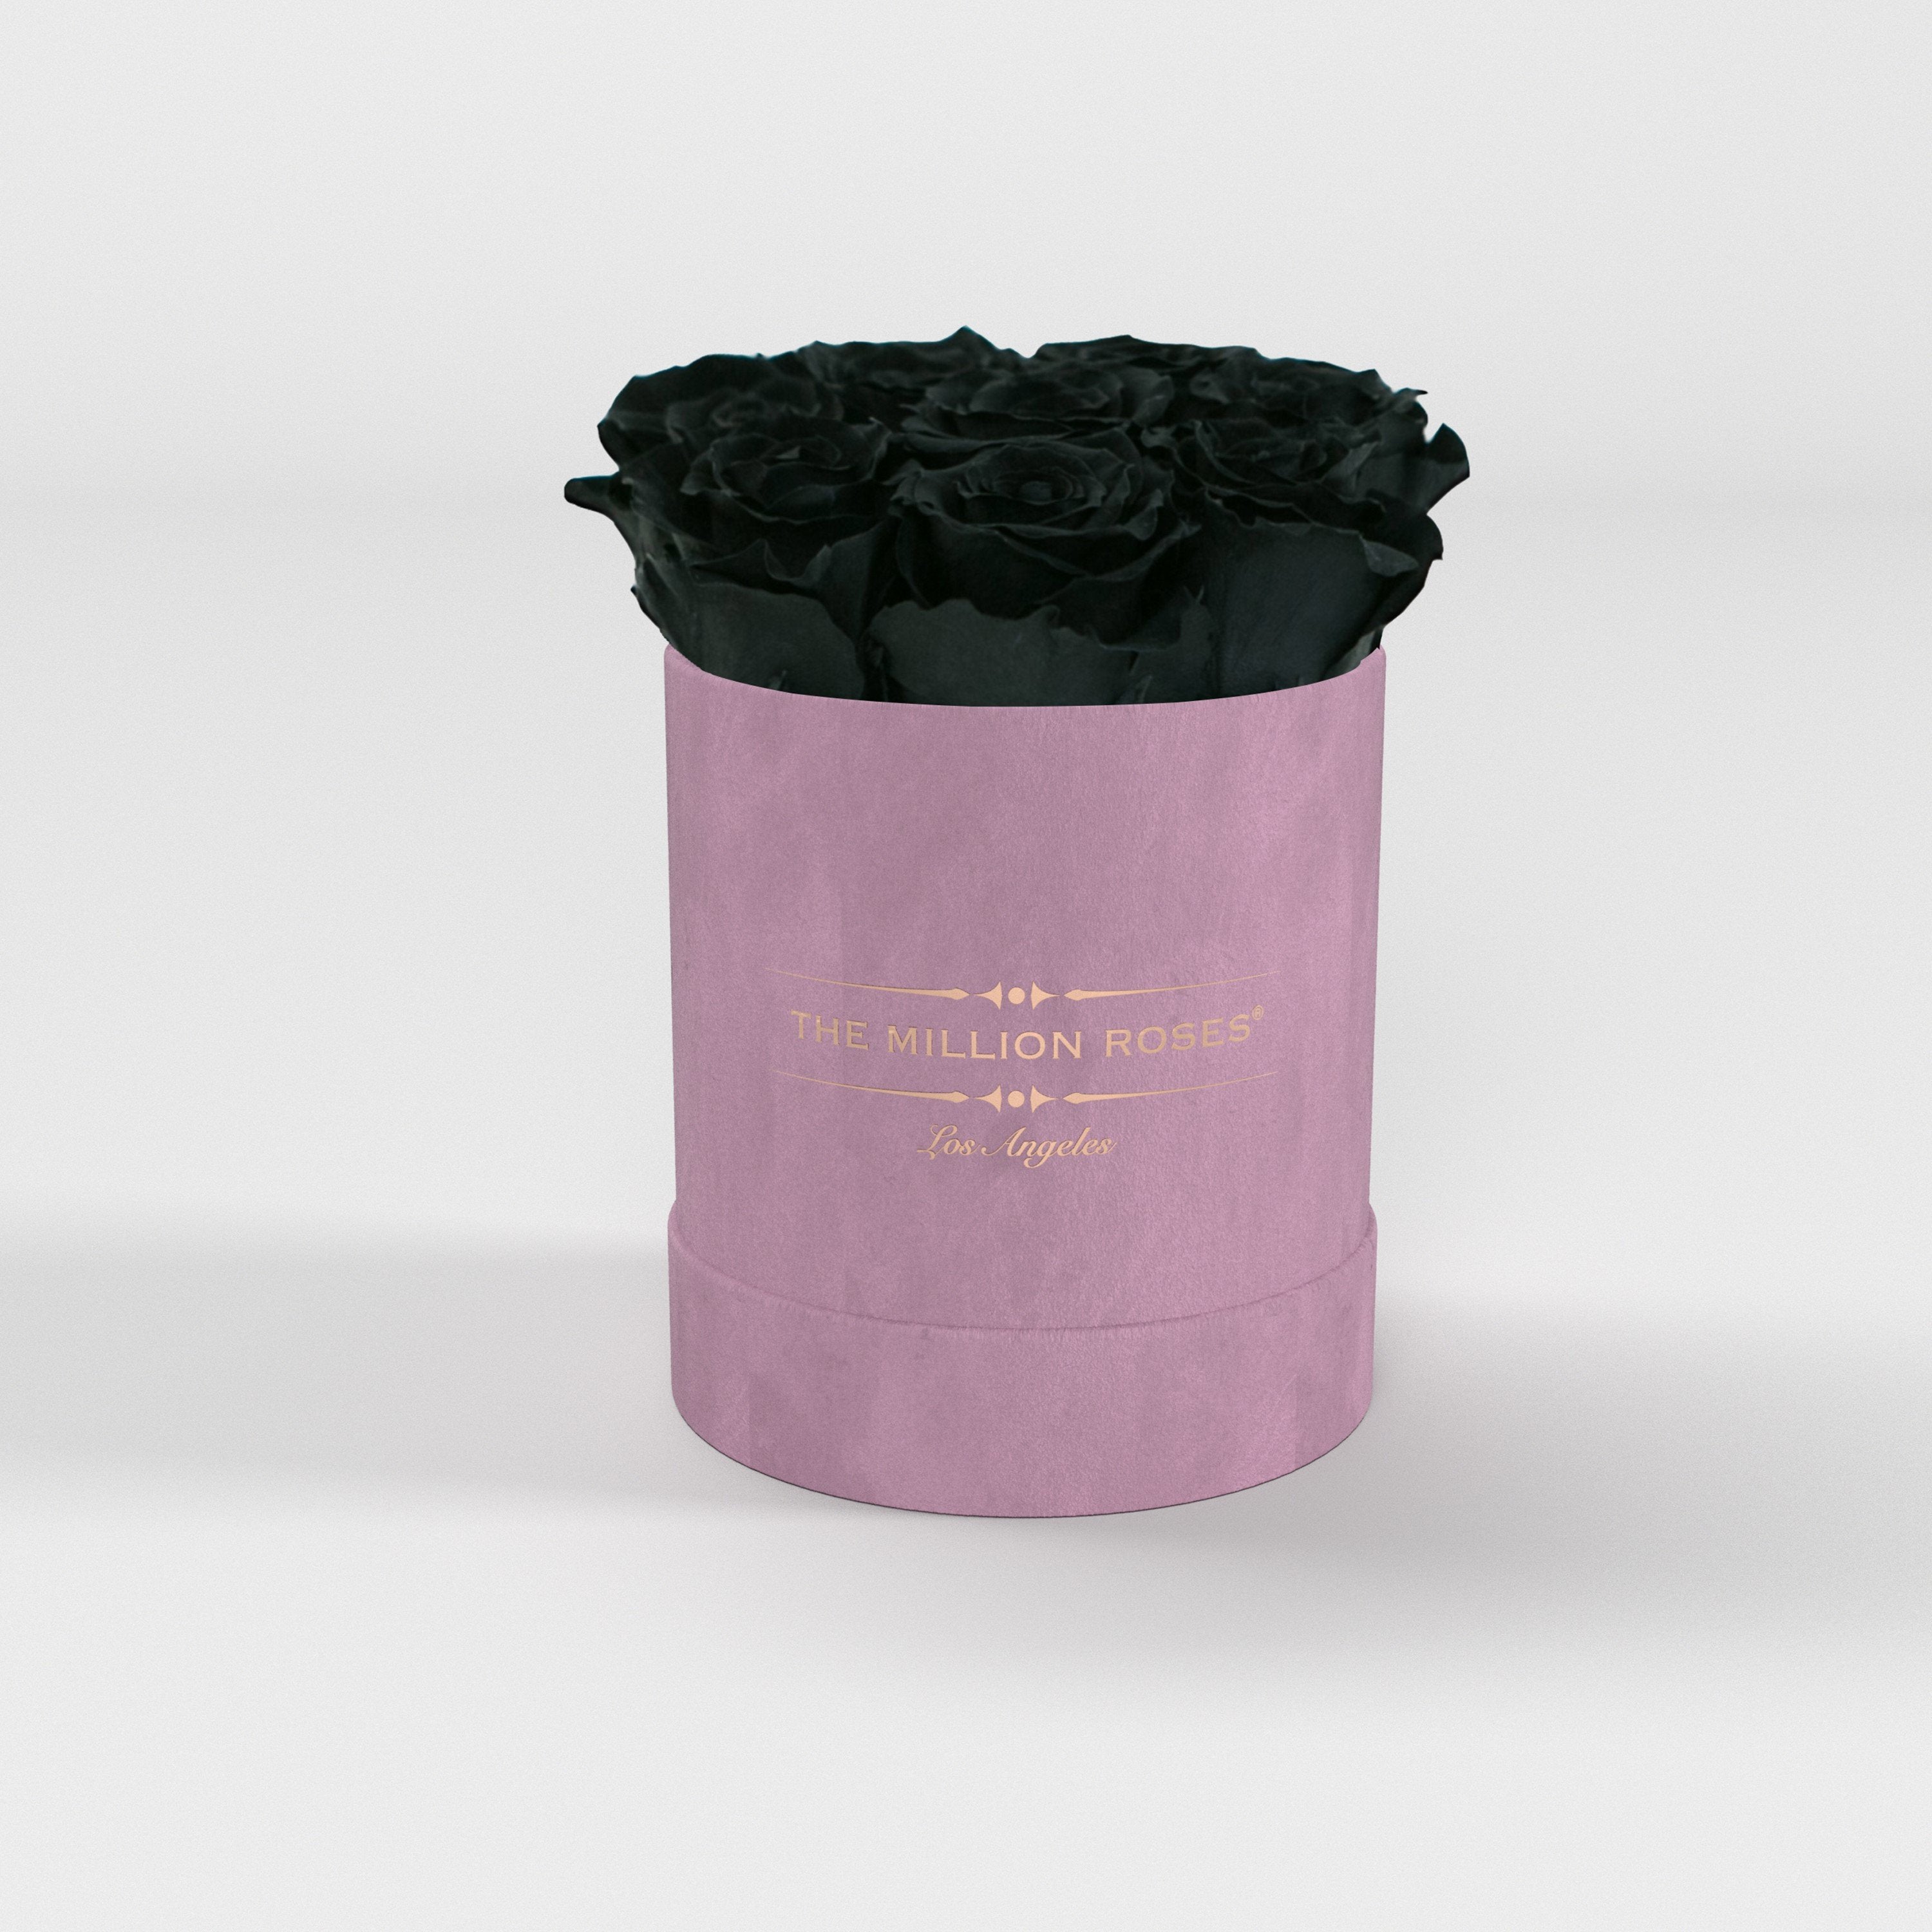 ( LA ) Light Pink - Suede - Basic Box with Black Roses Kit - the million roses